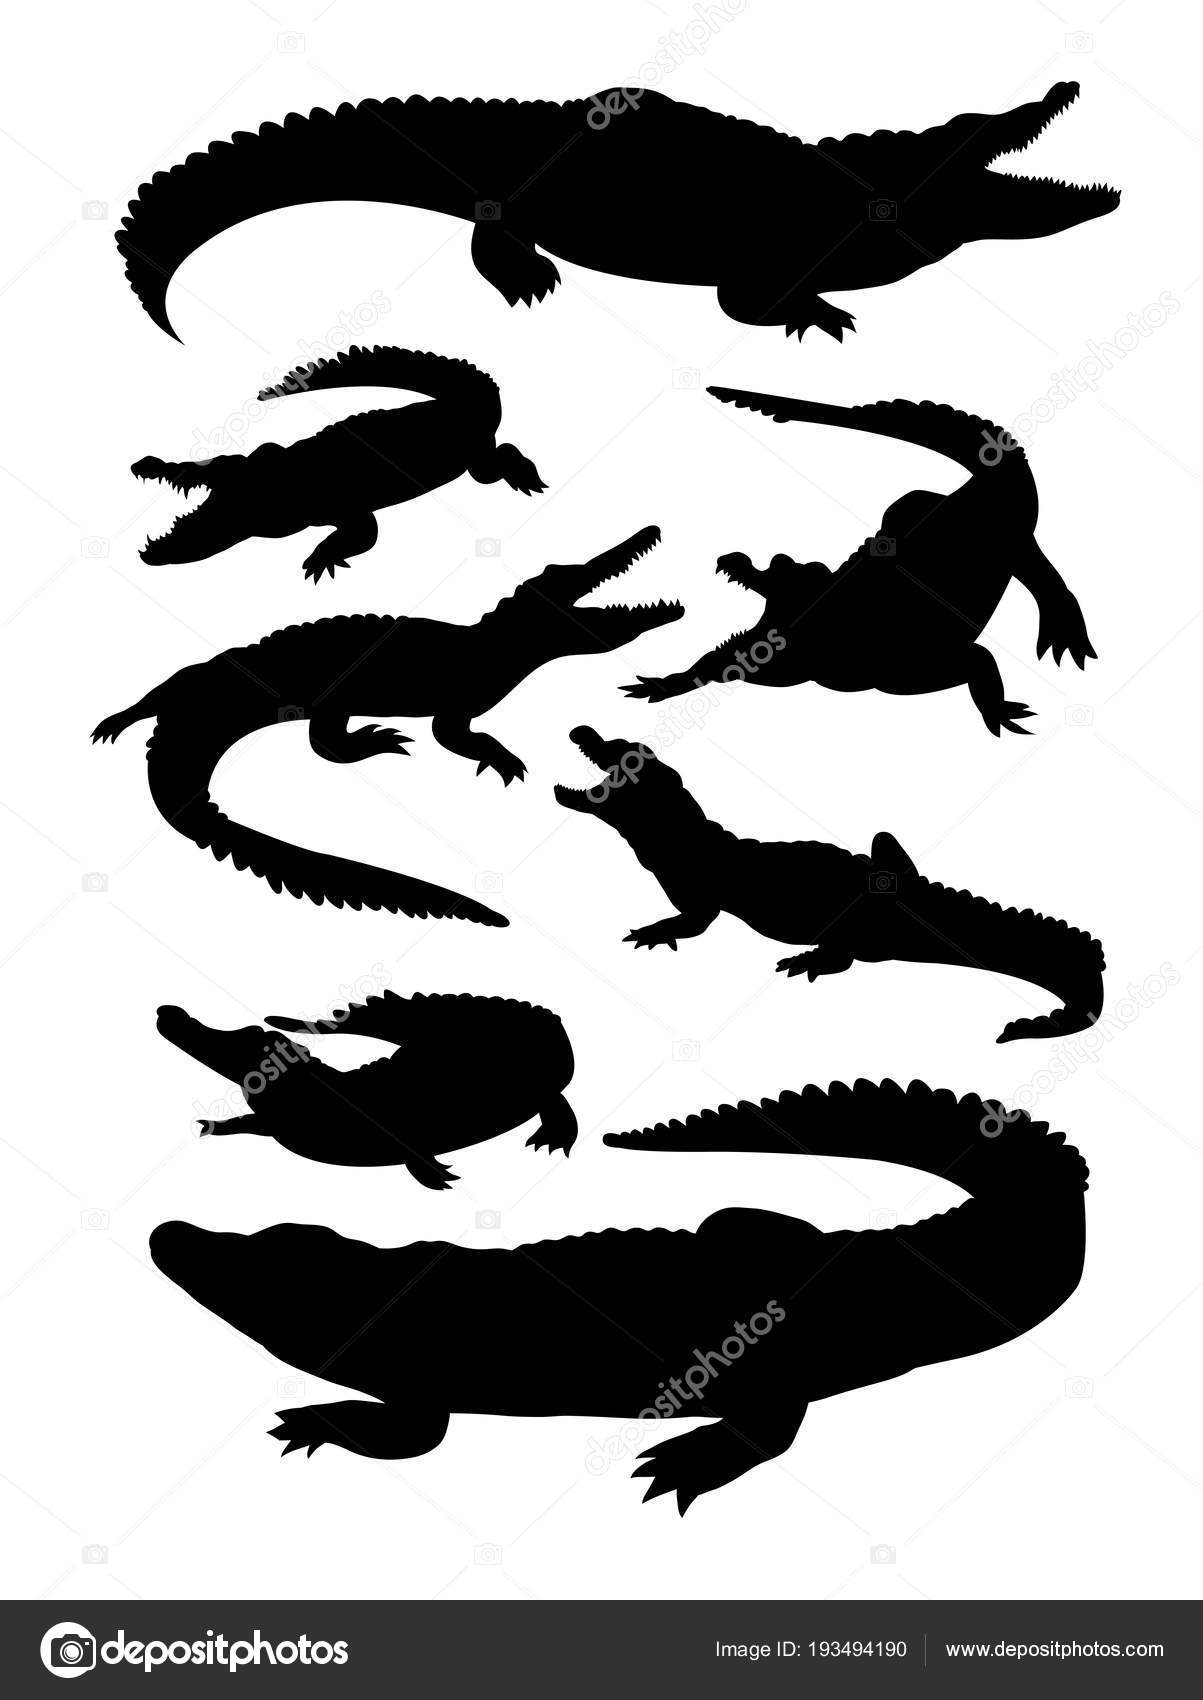 crocodile symbol logo